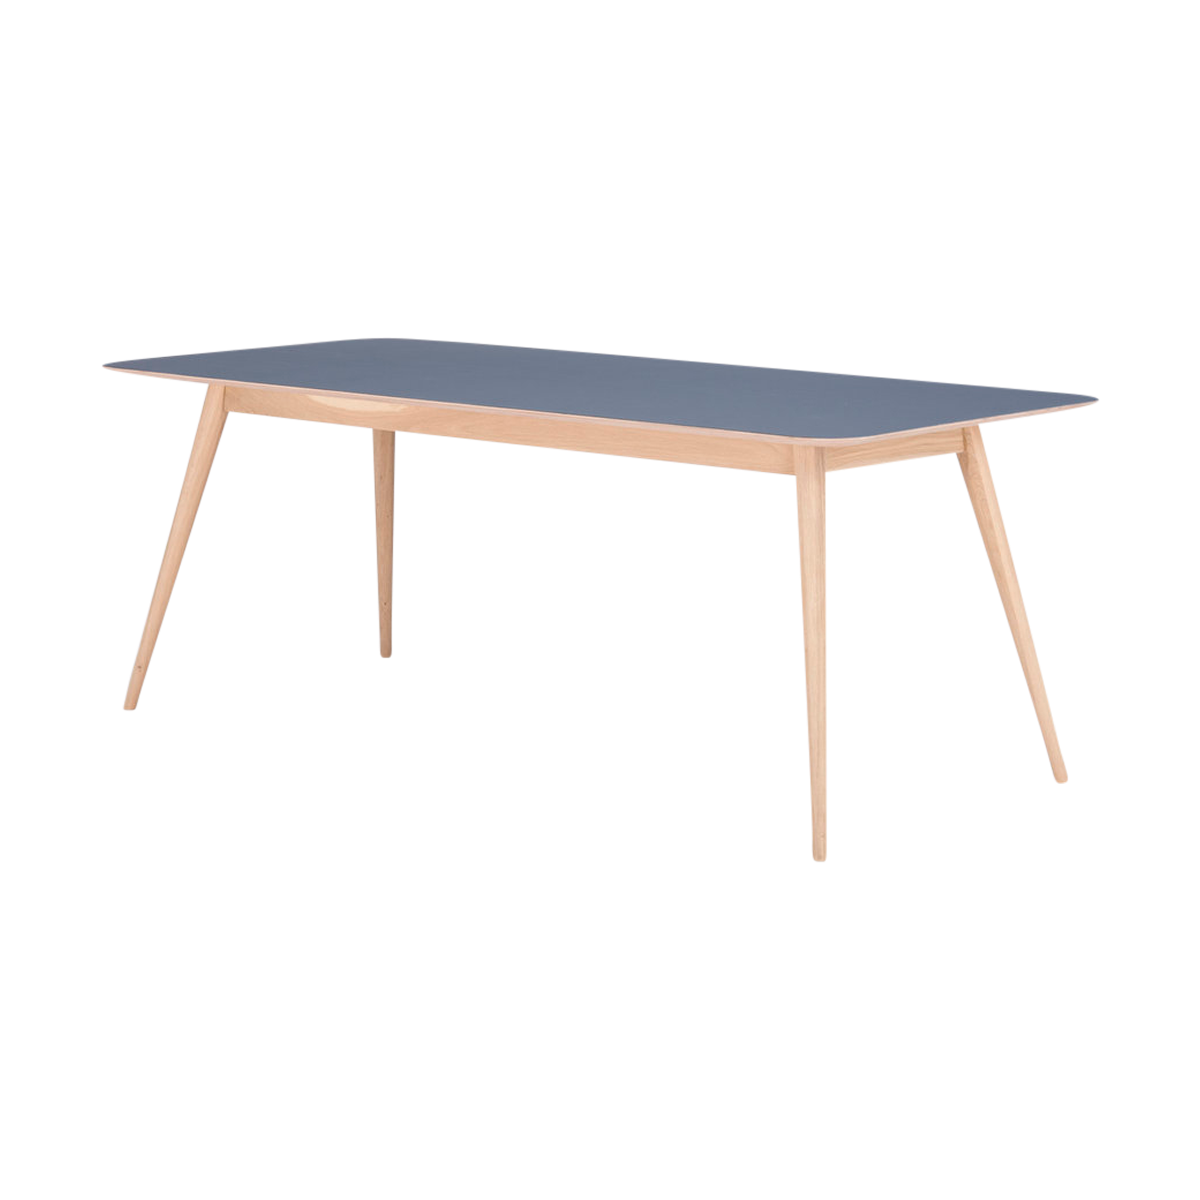 Stafa table houten eettafel whitewash - met linoleum tafelblad smokey blue - 140 x 90 cm